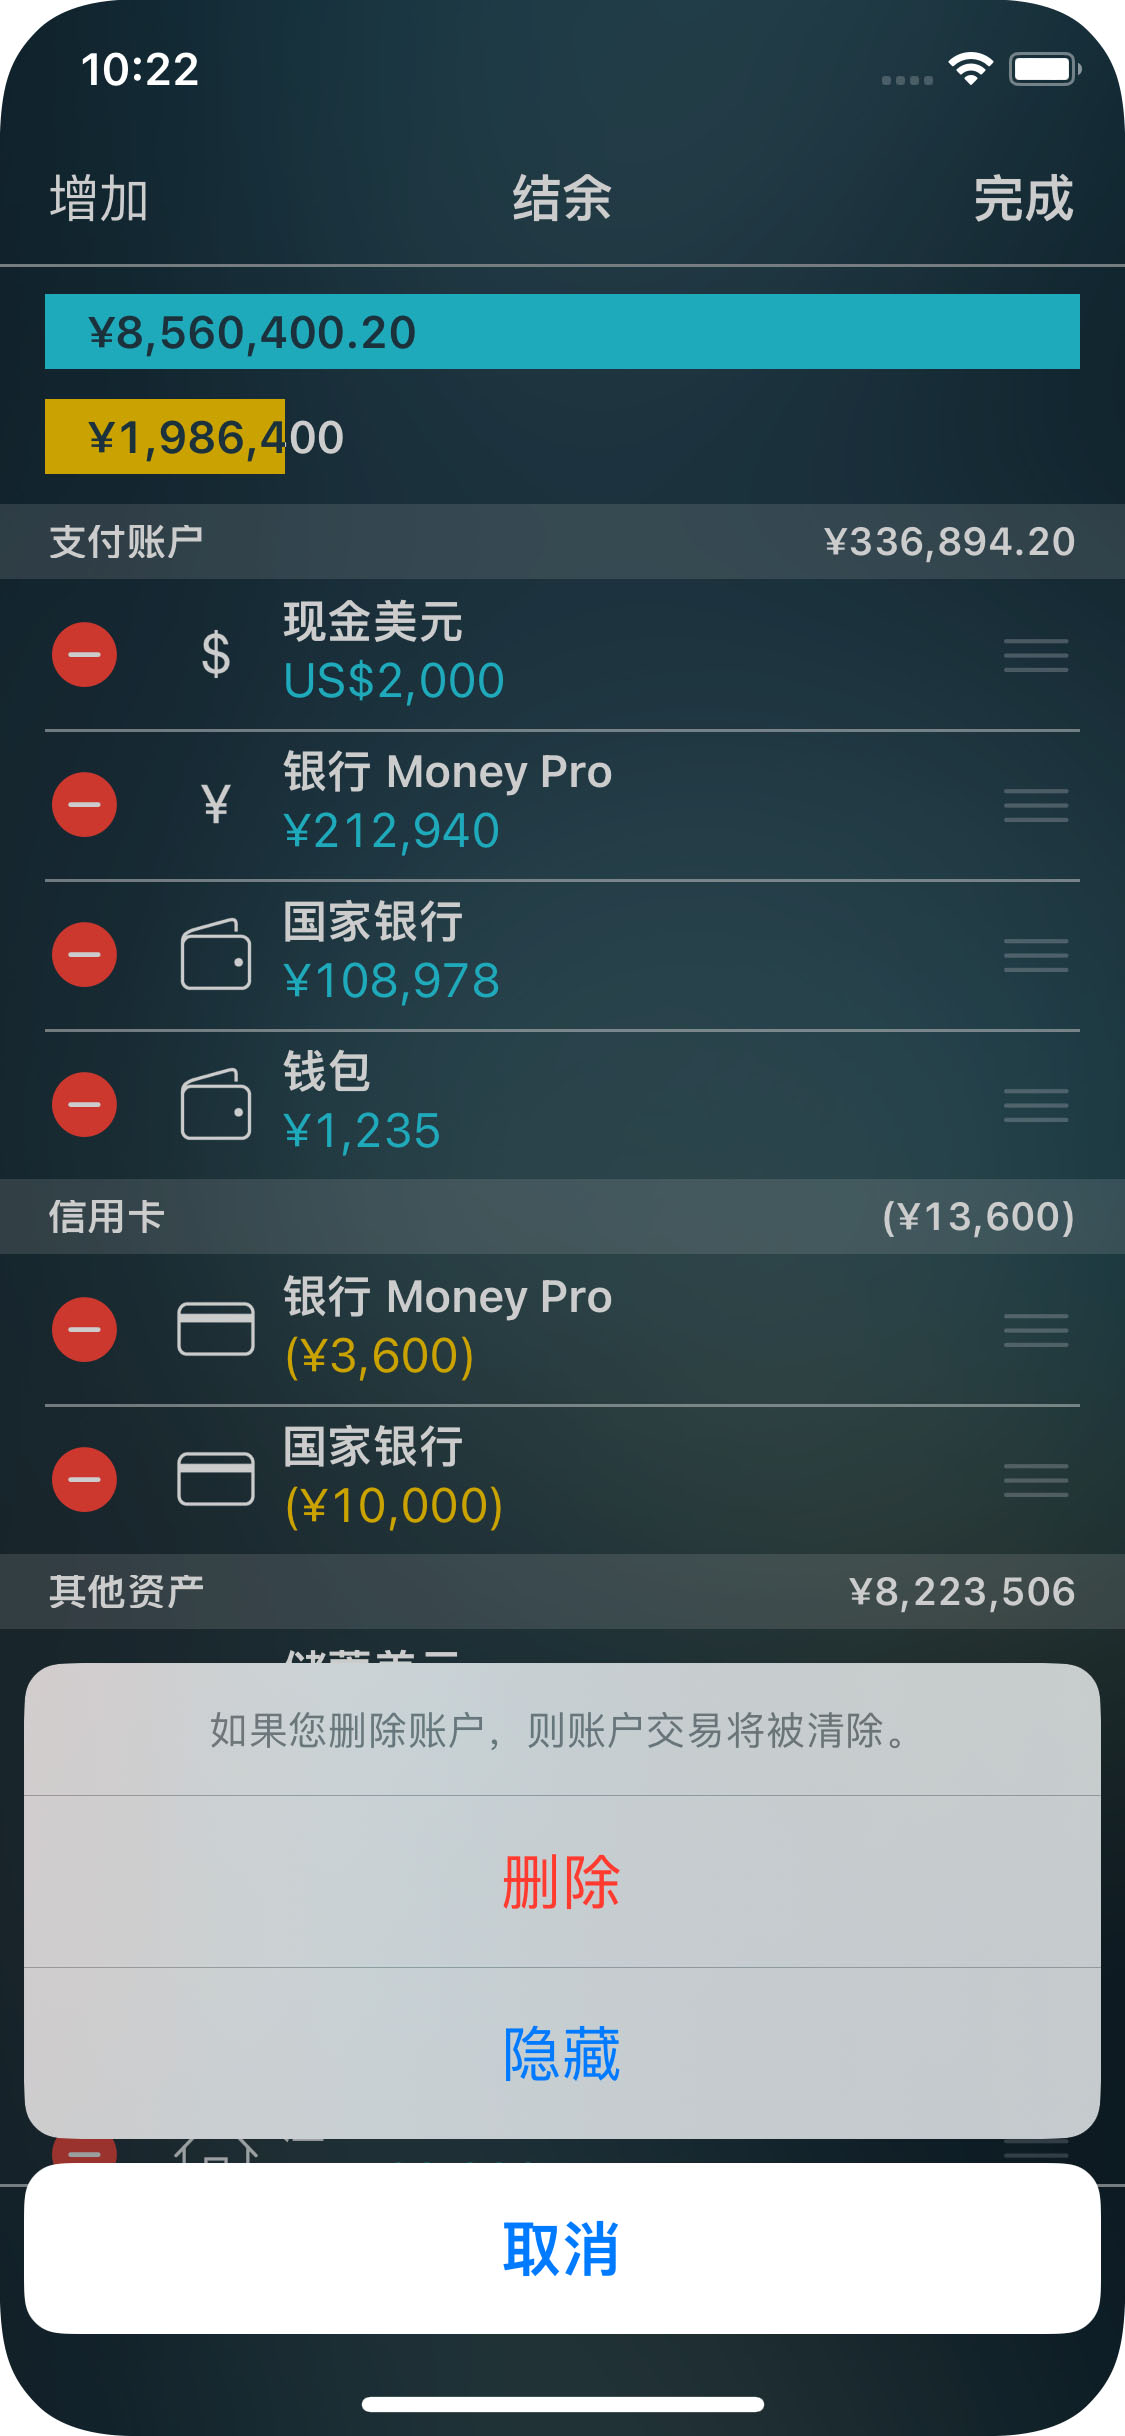 Money Pro - 删除账户 - iPhone